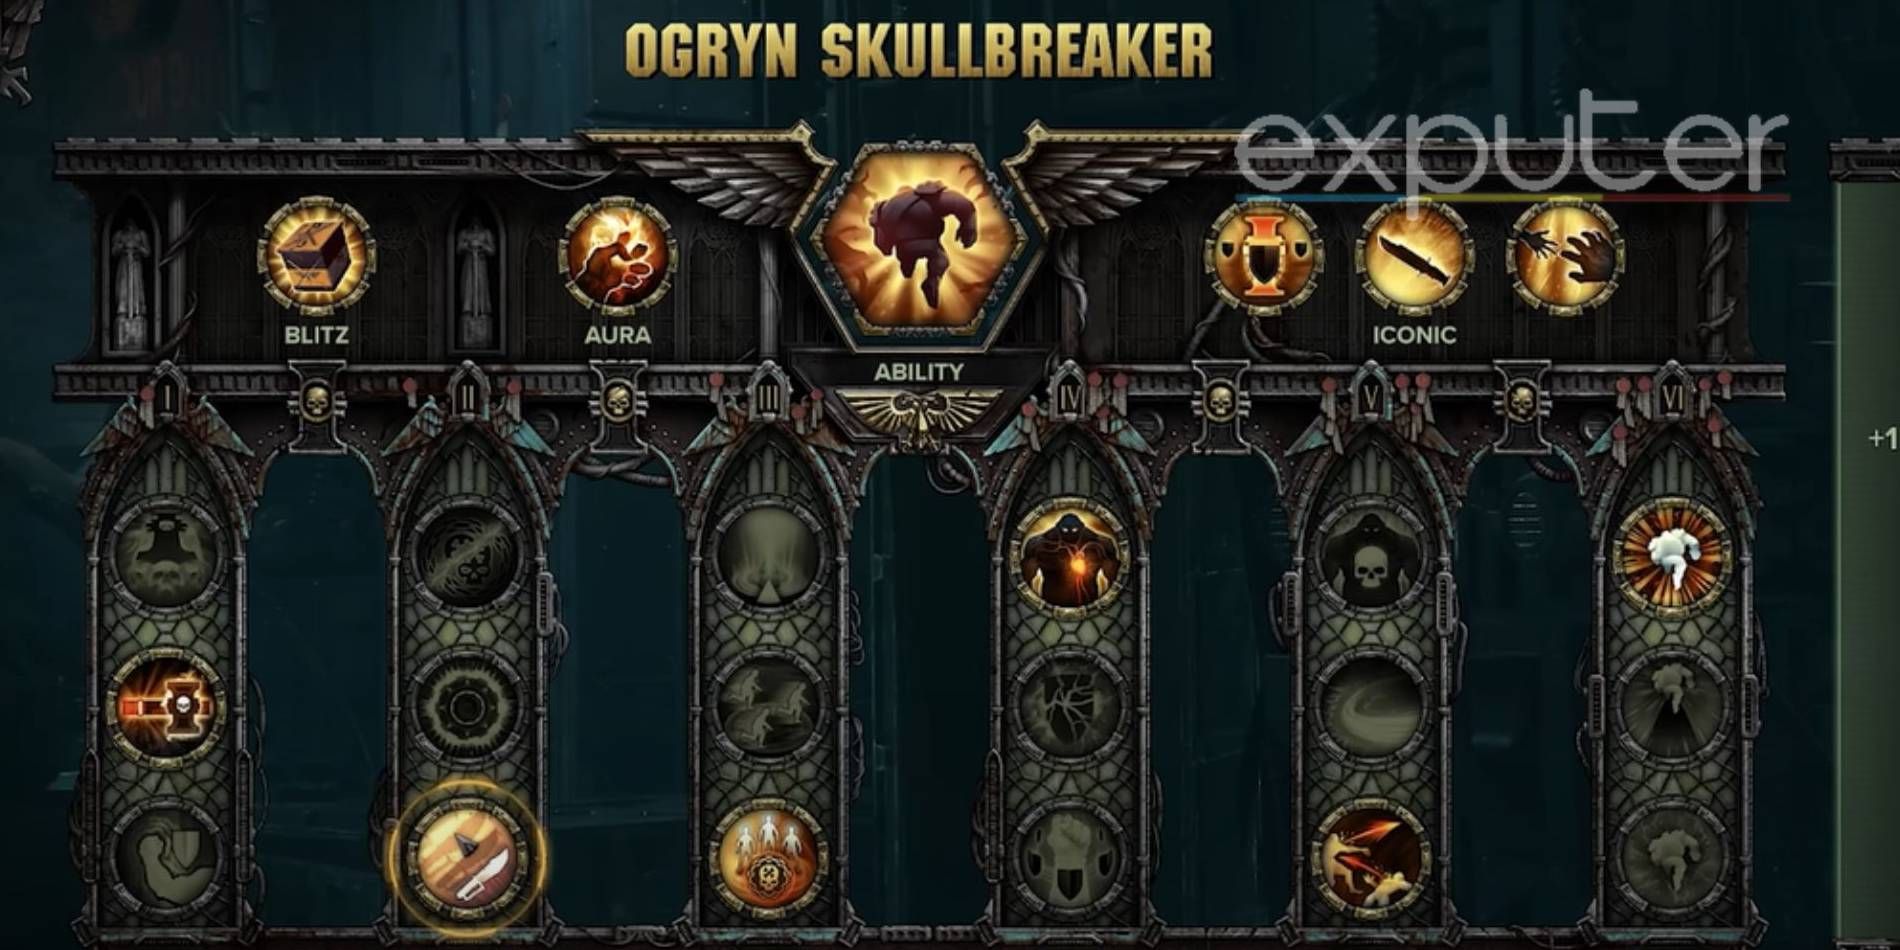 Warhammer 40k: Darktide Ogryn Skullbreaker Skill Tree with class ability, aura and iconic passive abilities